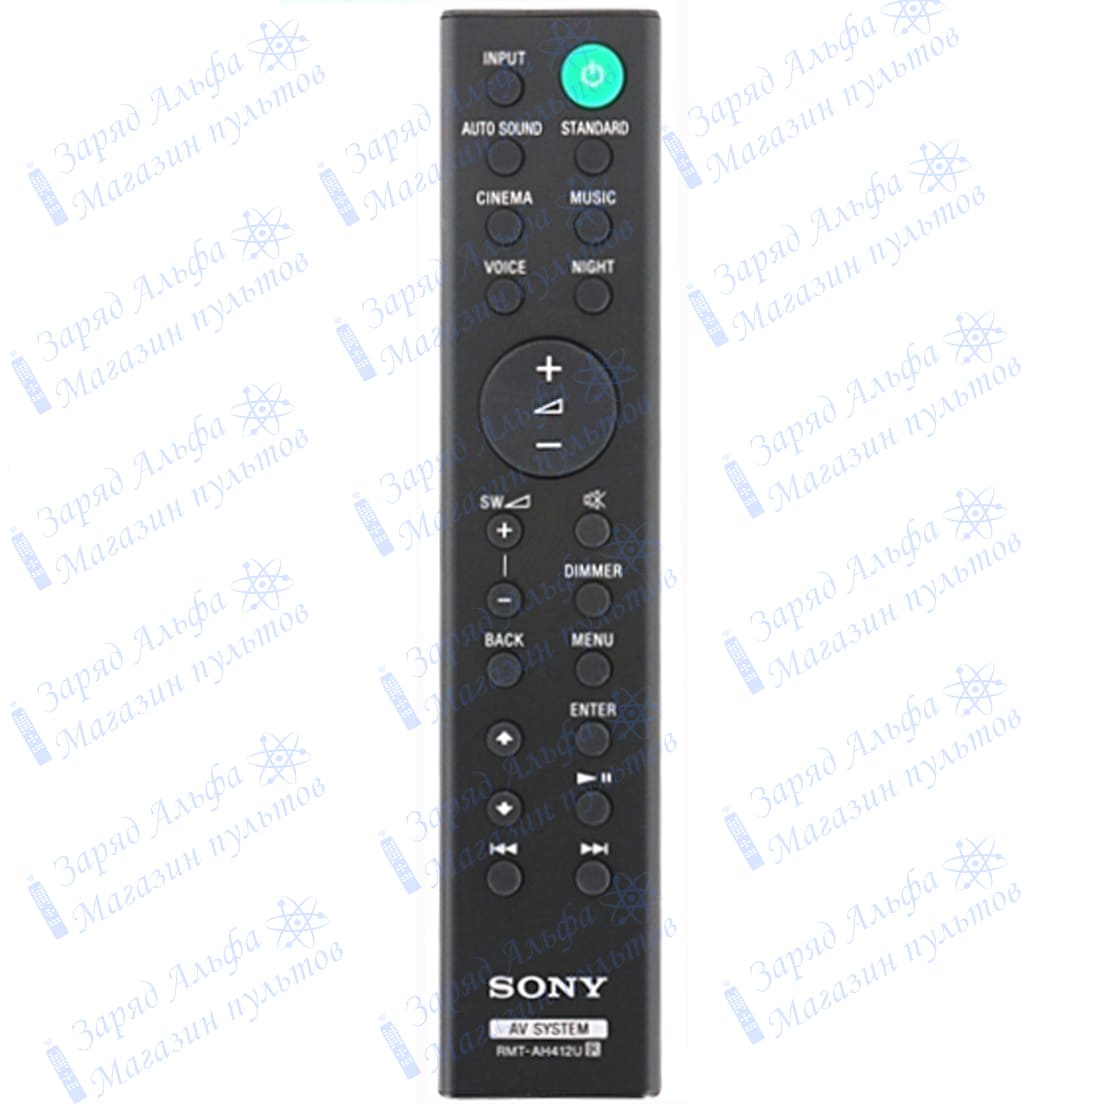 Пульт к Sony RMT-AH412 домаш кинотеатру HT-S700RF, SA-WS700RF